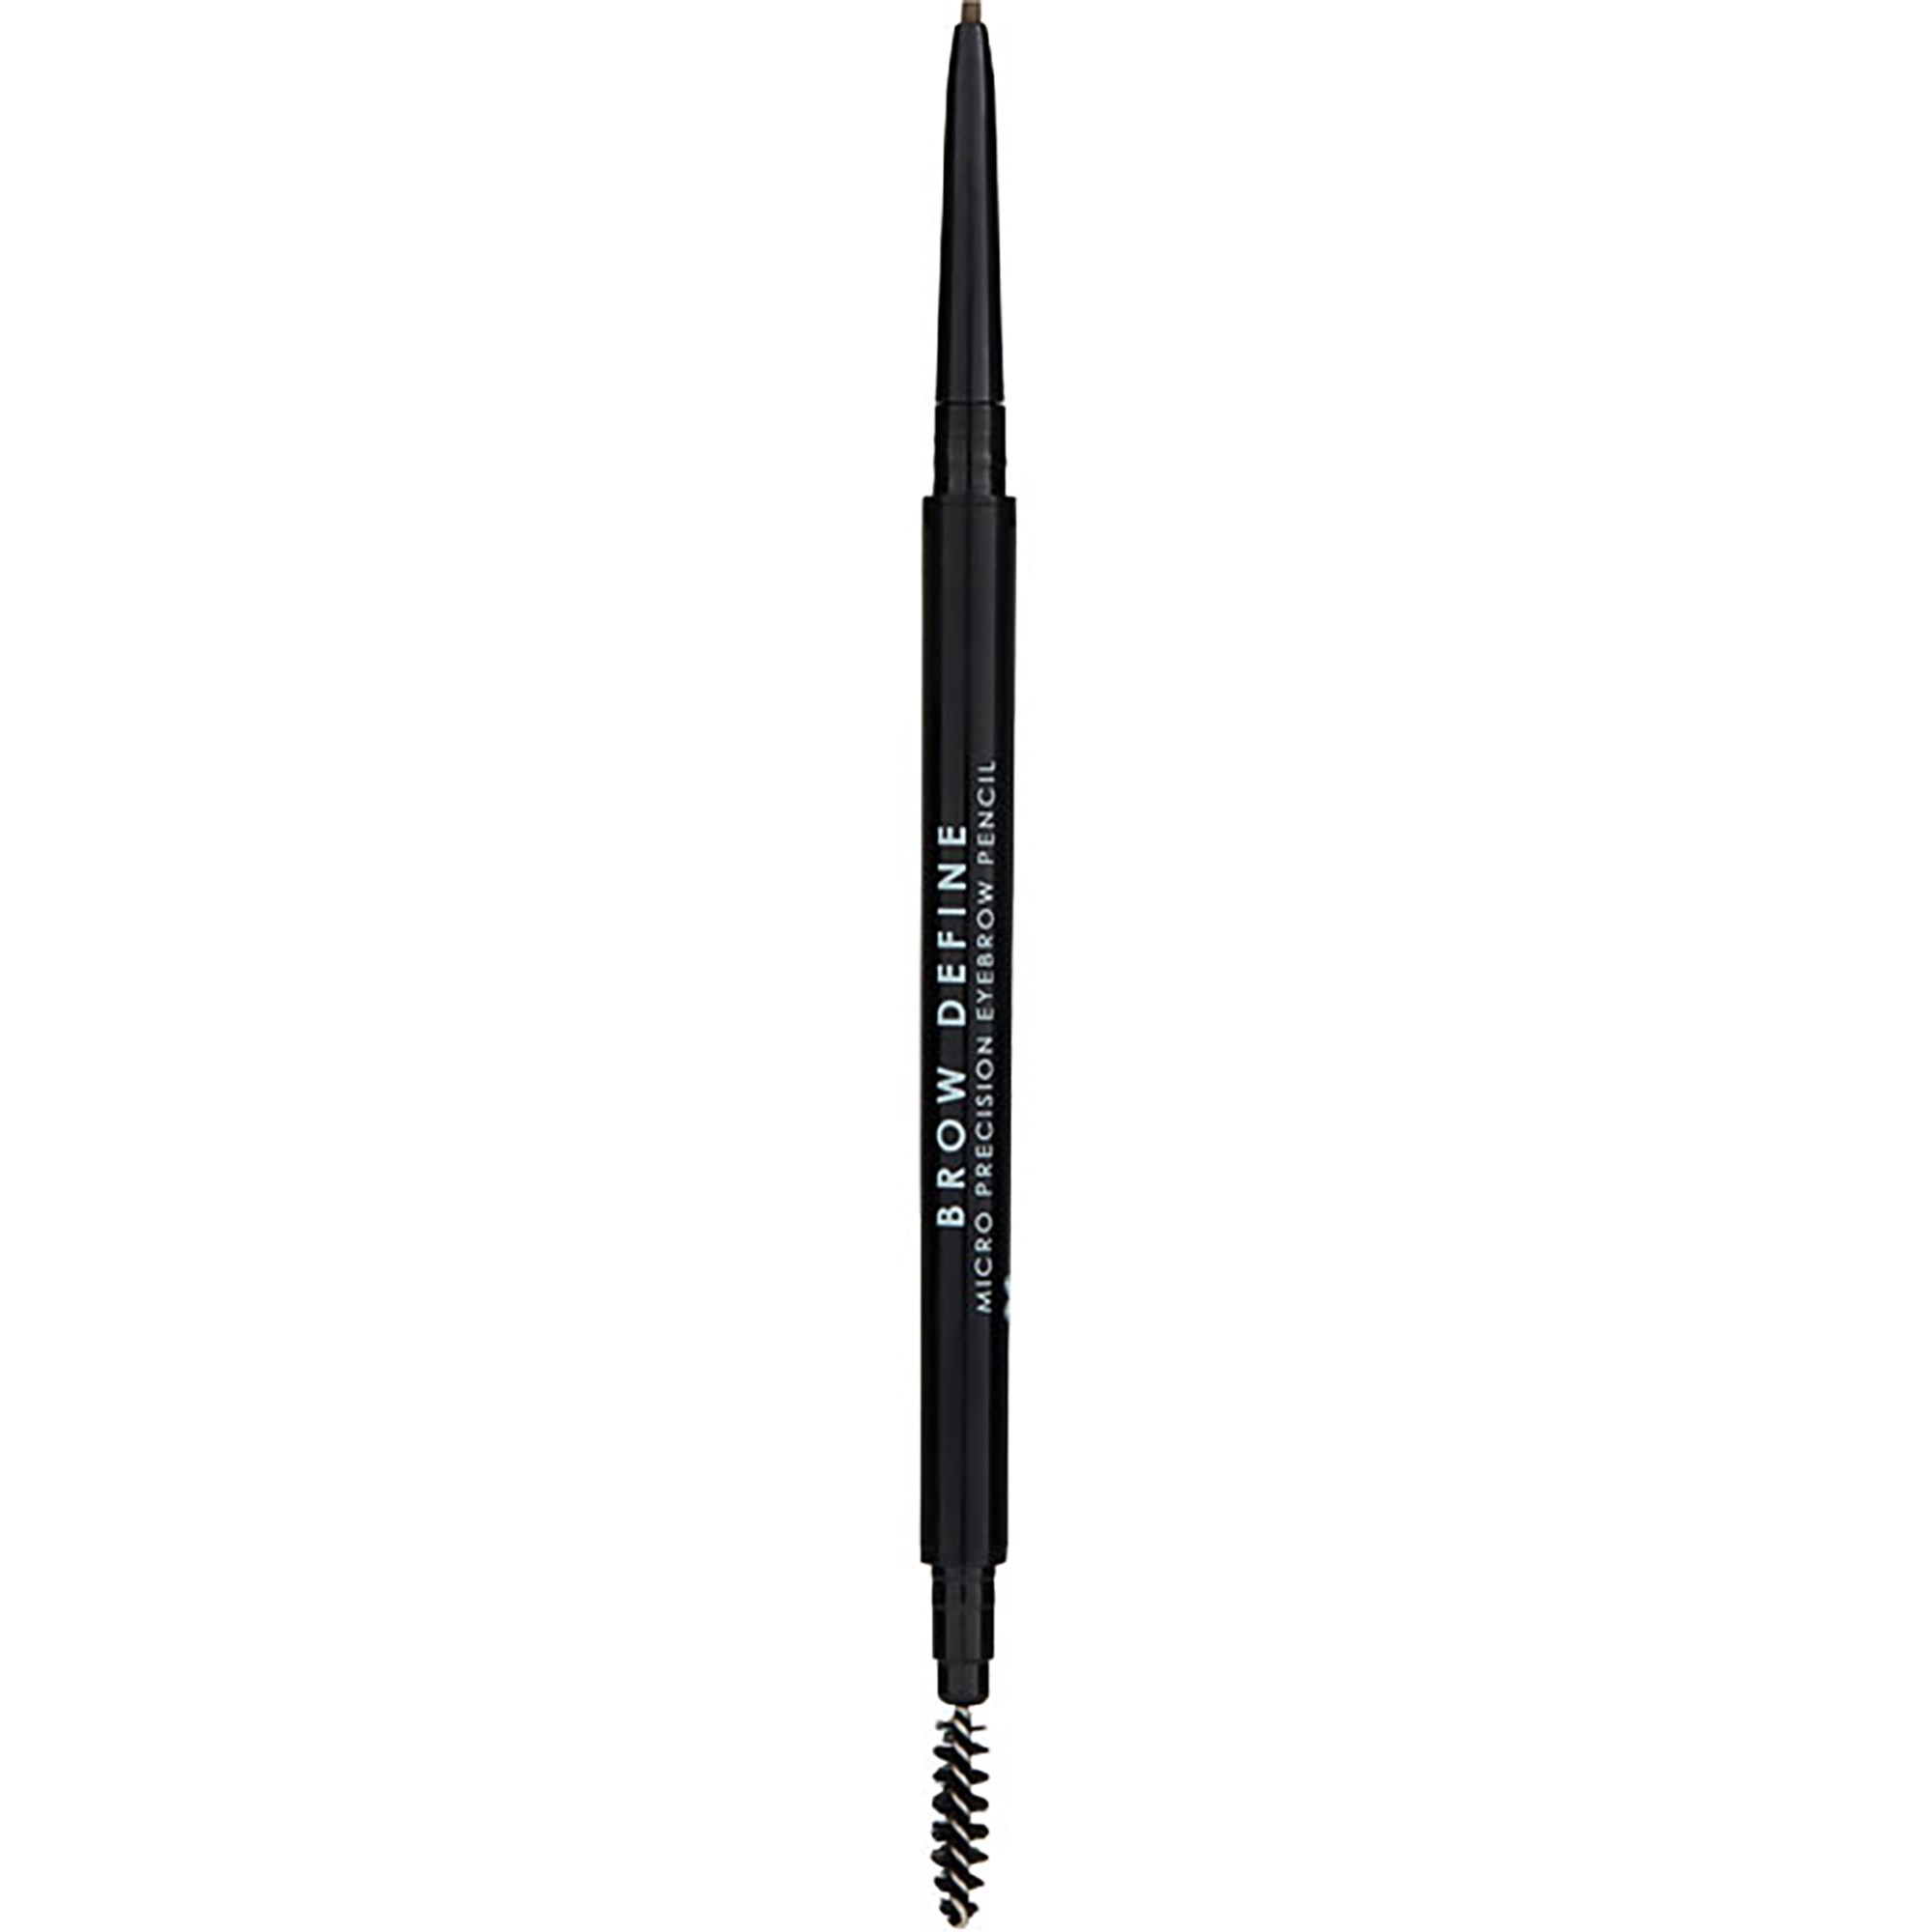 Bilde av Mua Makeup Academy Brow Define Micro Precision Eyebrow Pencil Mid Brow